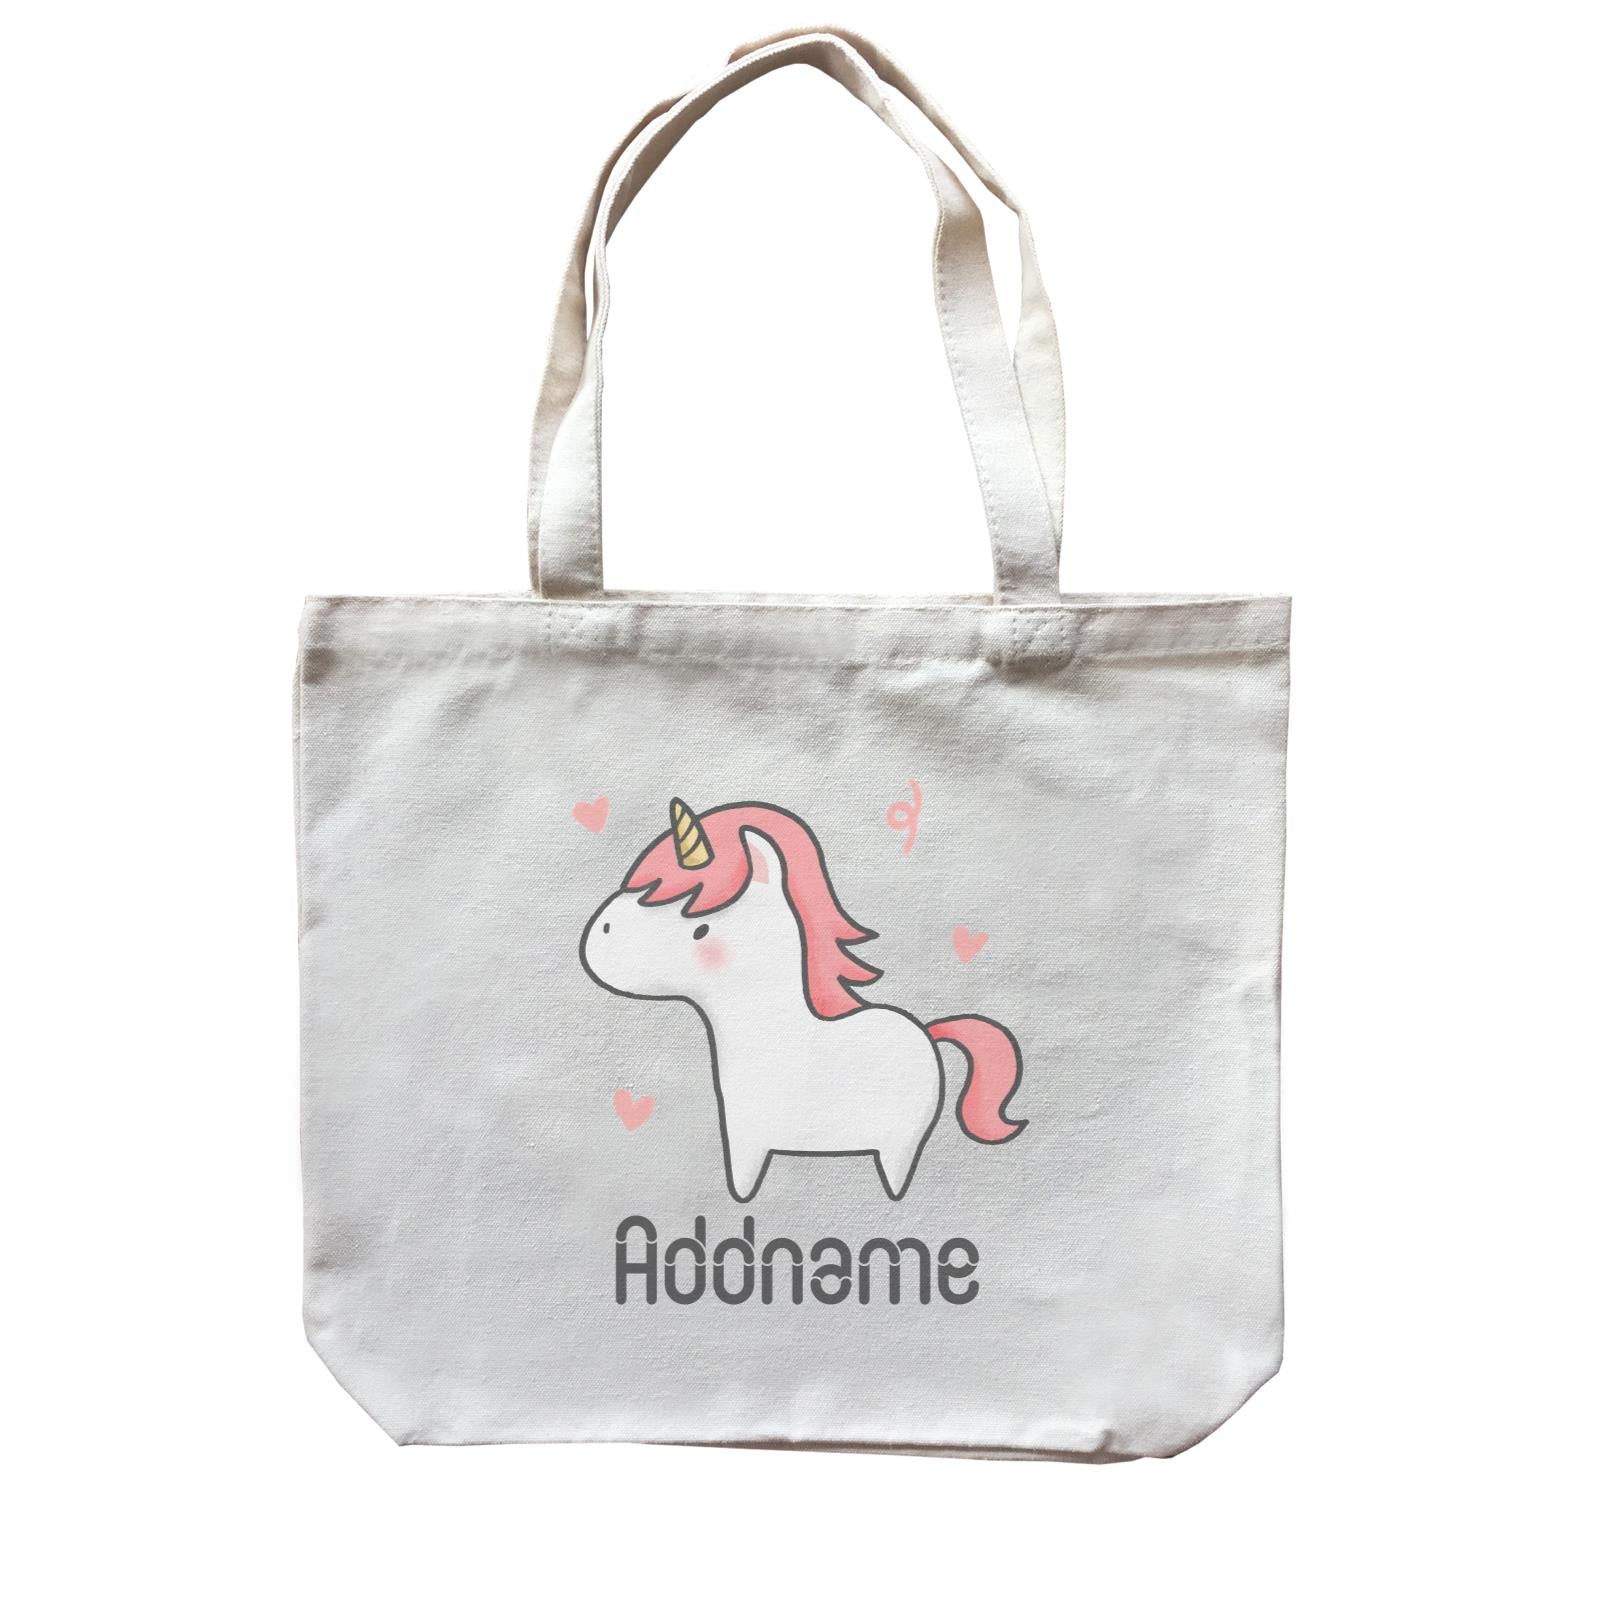 Cute Hand Drawn Style Unicorn Addname Canvas Bag